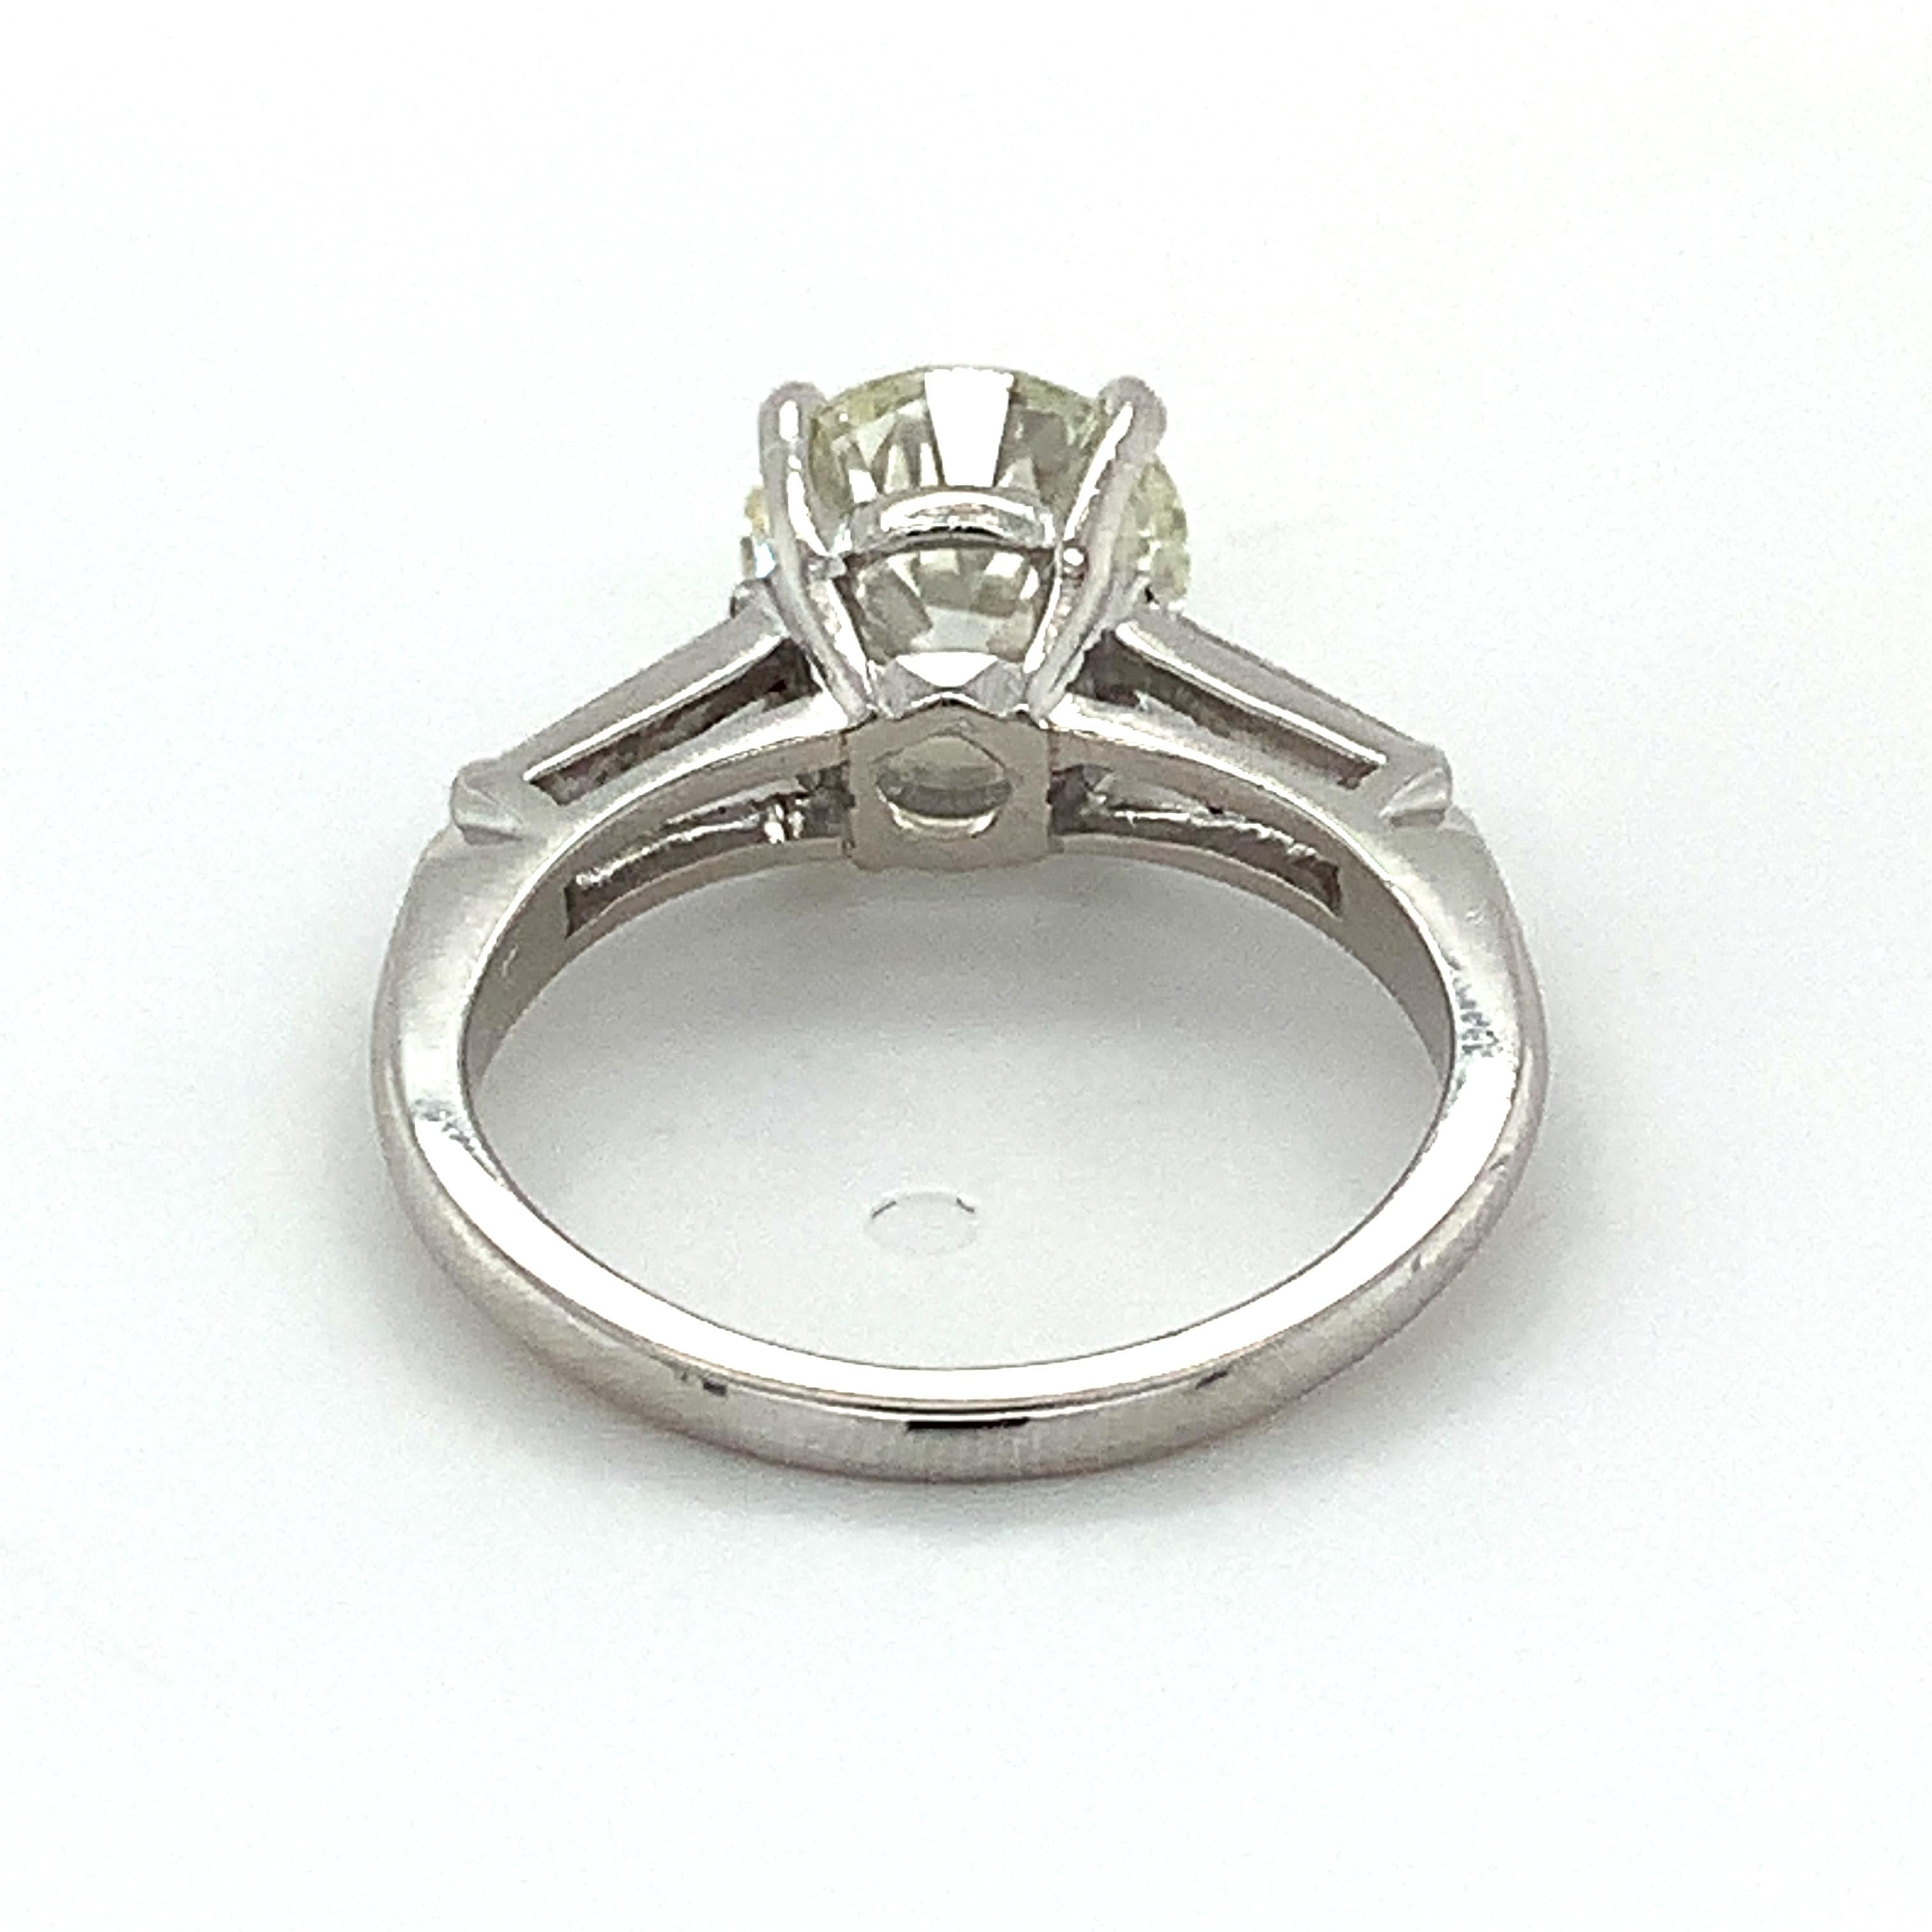 10% Irid 90% Plat GIA 2.12 L-VVS2 Round Diamond & Tapered Baguette 3 Stone Ring 3